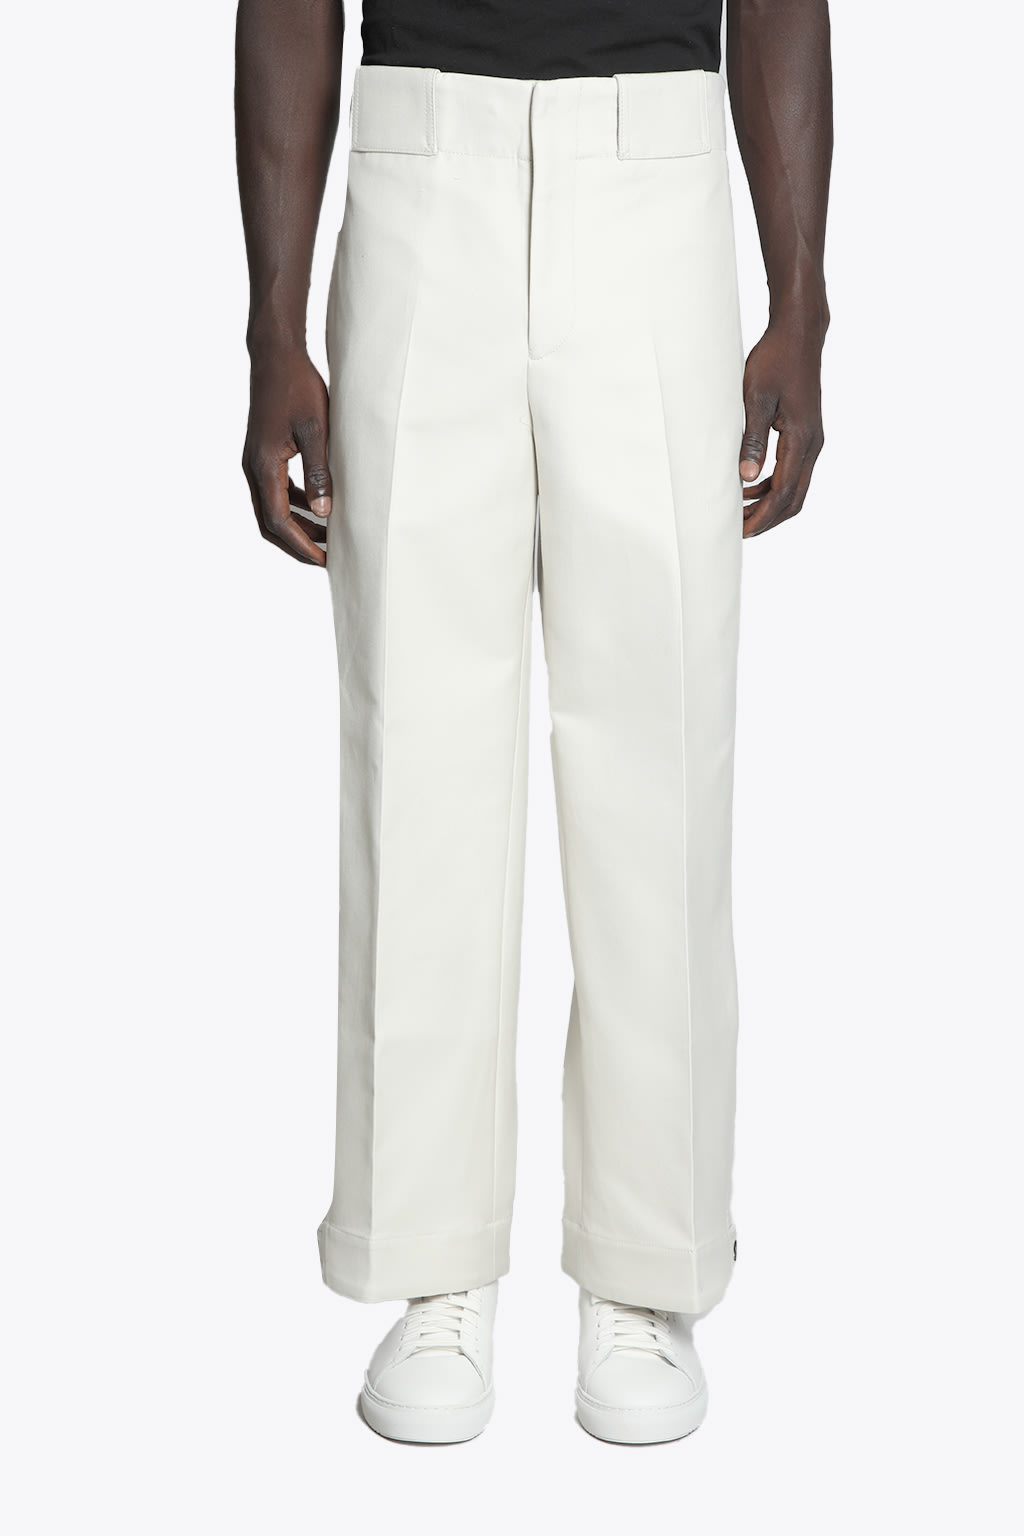 Emporio Armani Trouser Sand cotton pant with wide leg.